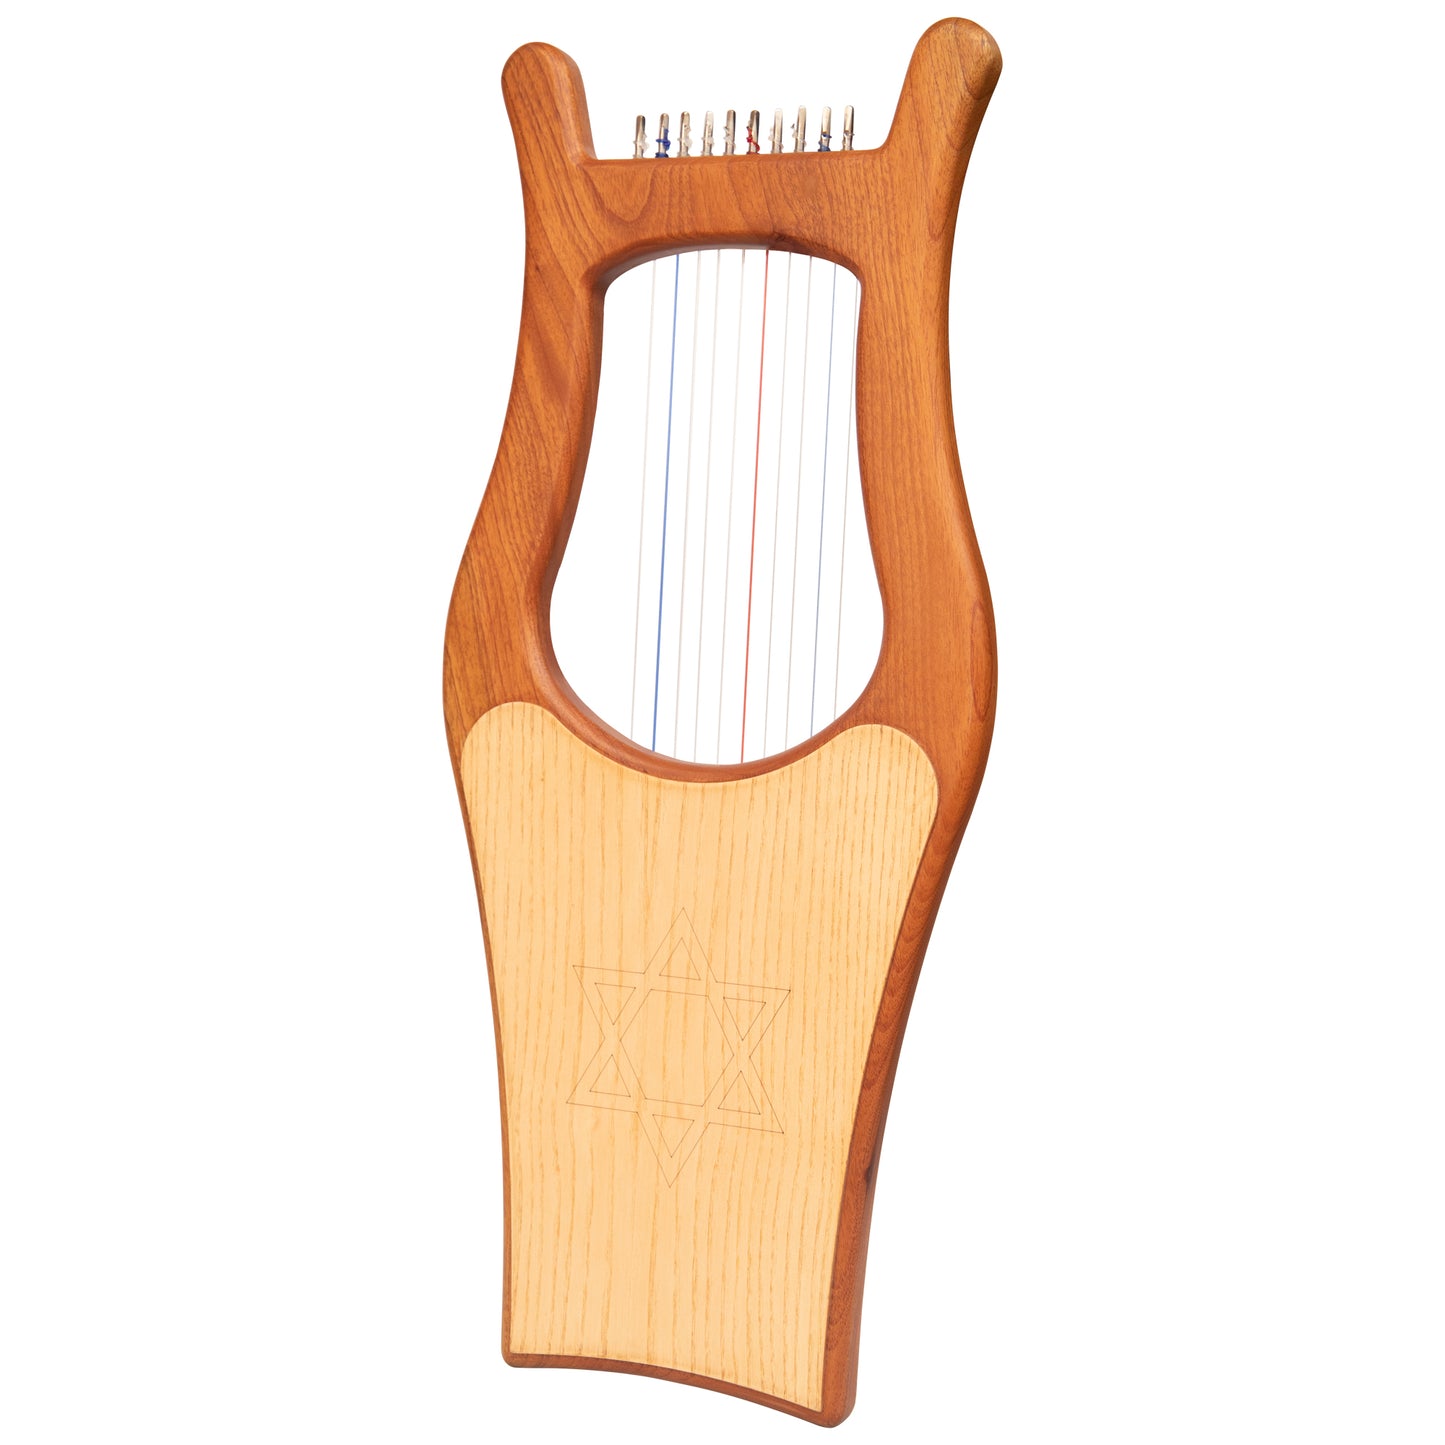 Muzikkon Large Kinnor Harp, 10 String Red Cedar